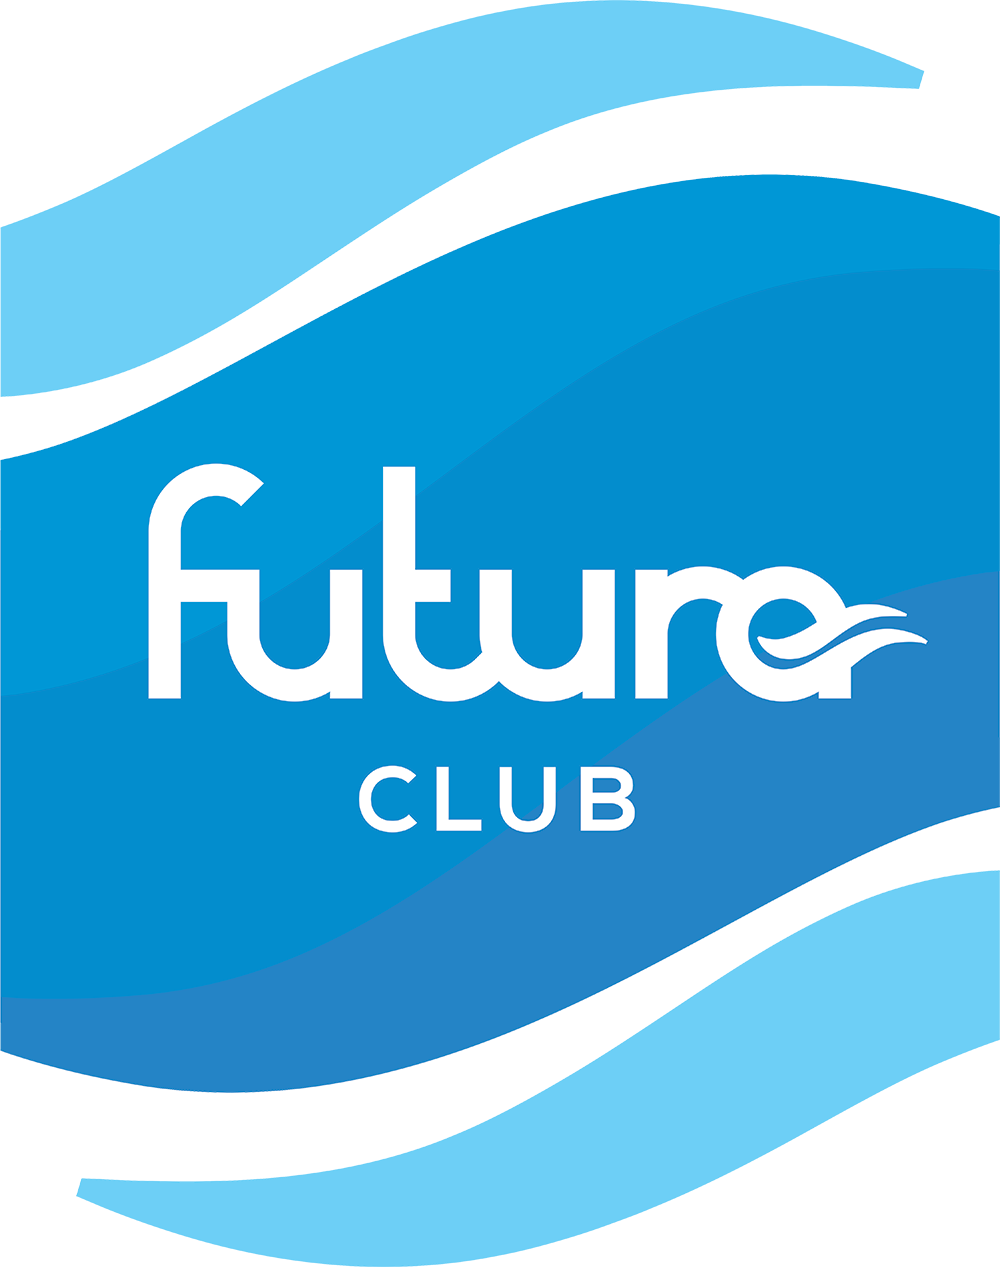 Futura Club